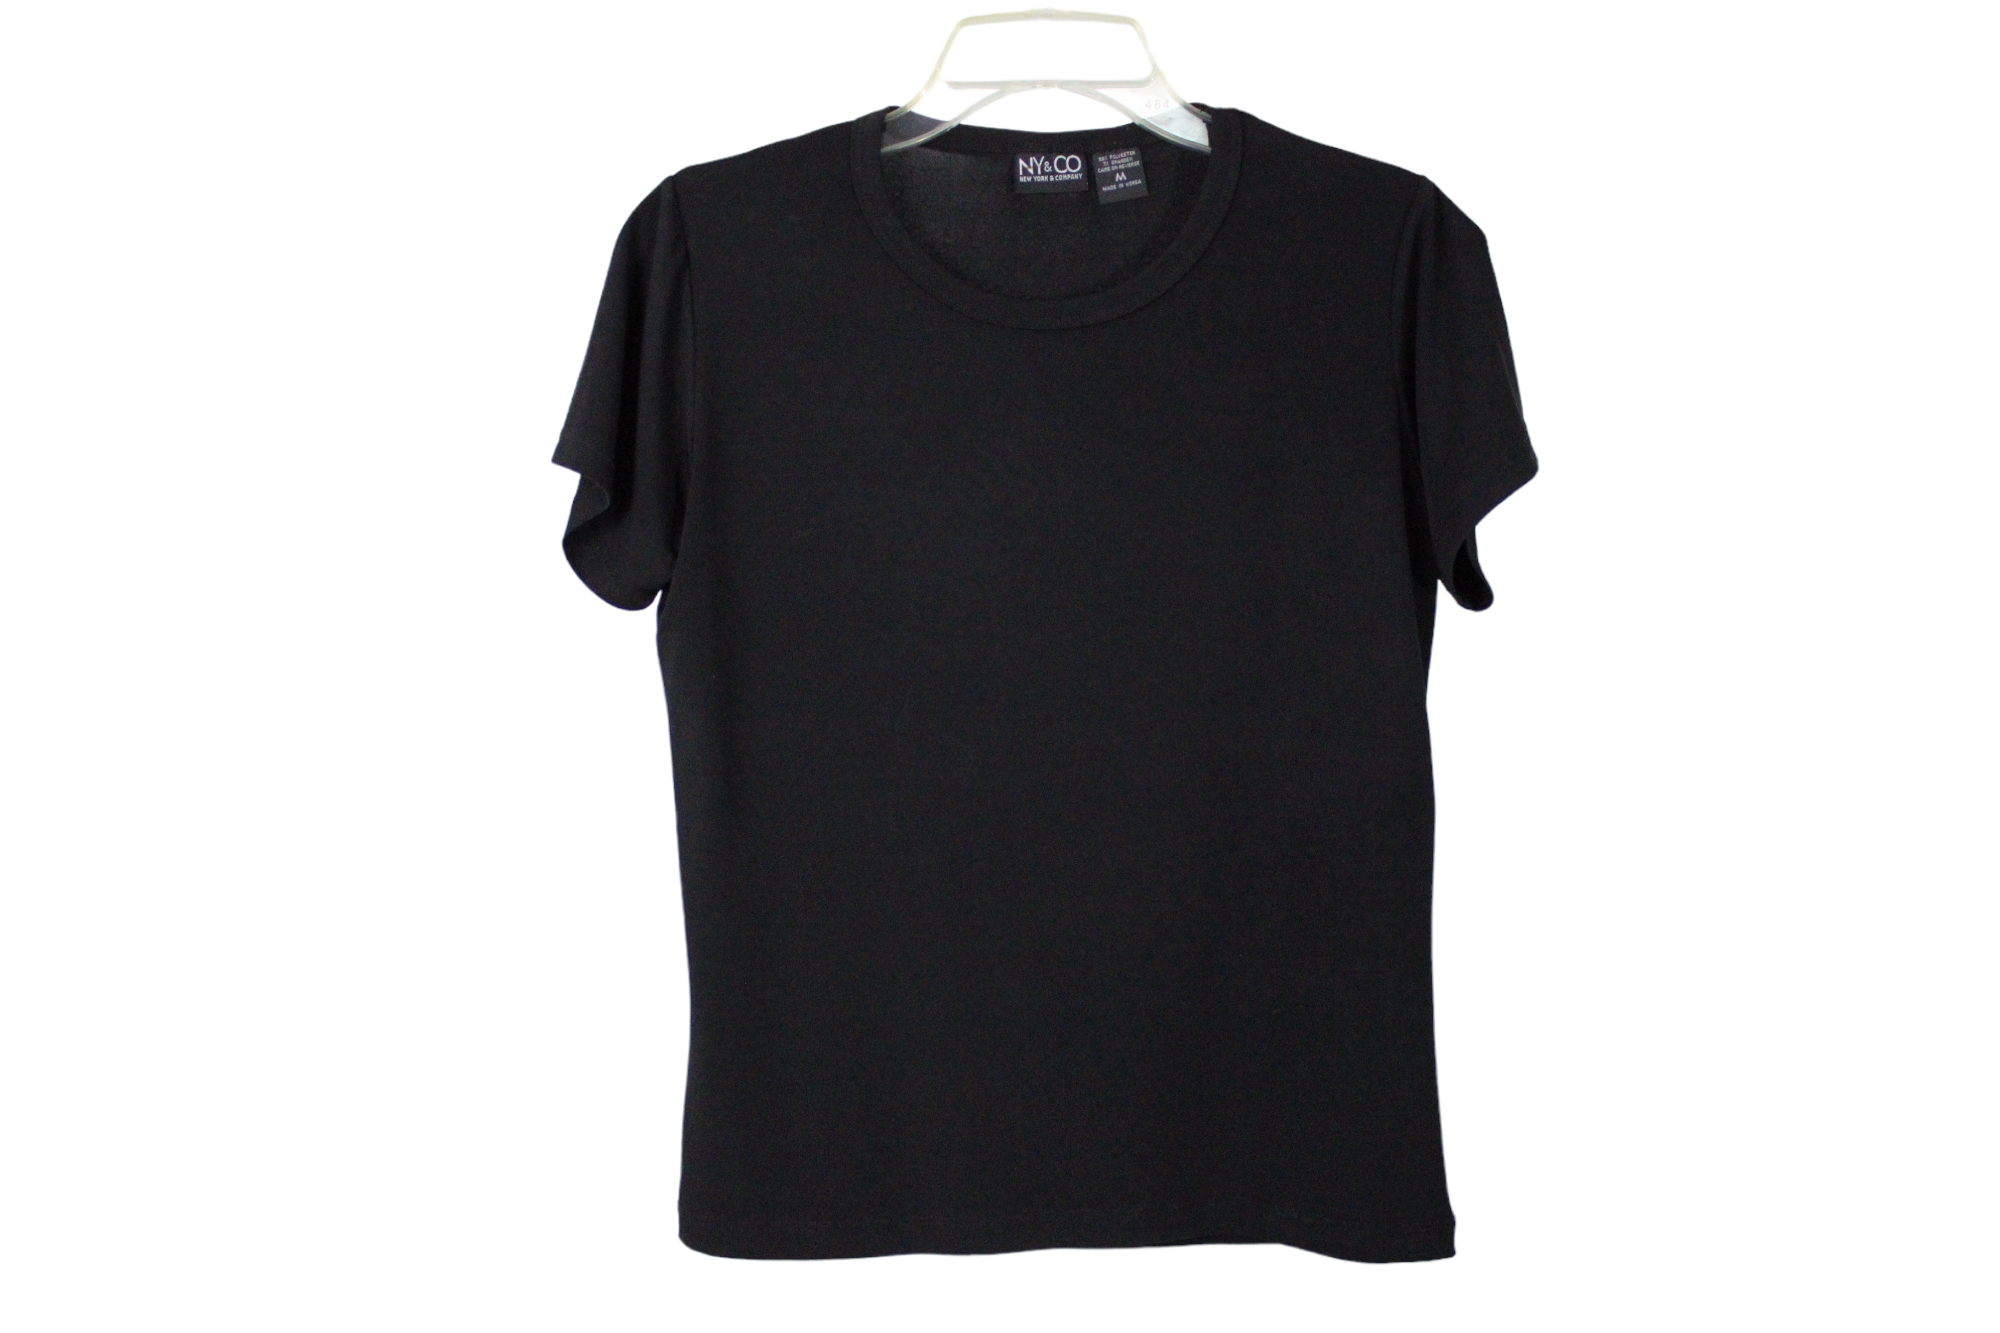 NY&Co. Stretch Black Shirt